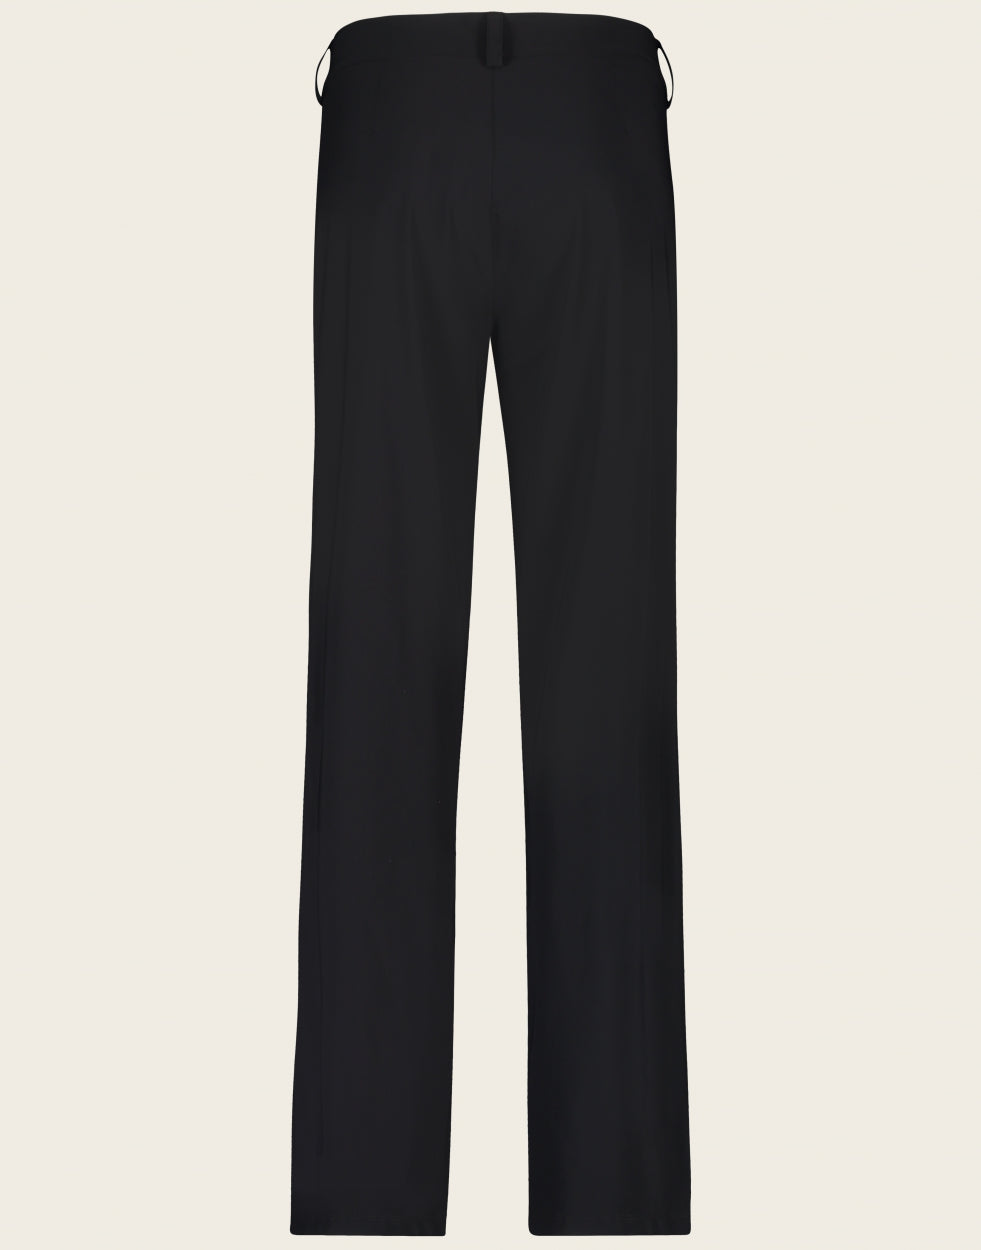 Pants Emily Technical Jersey | Black